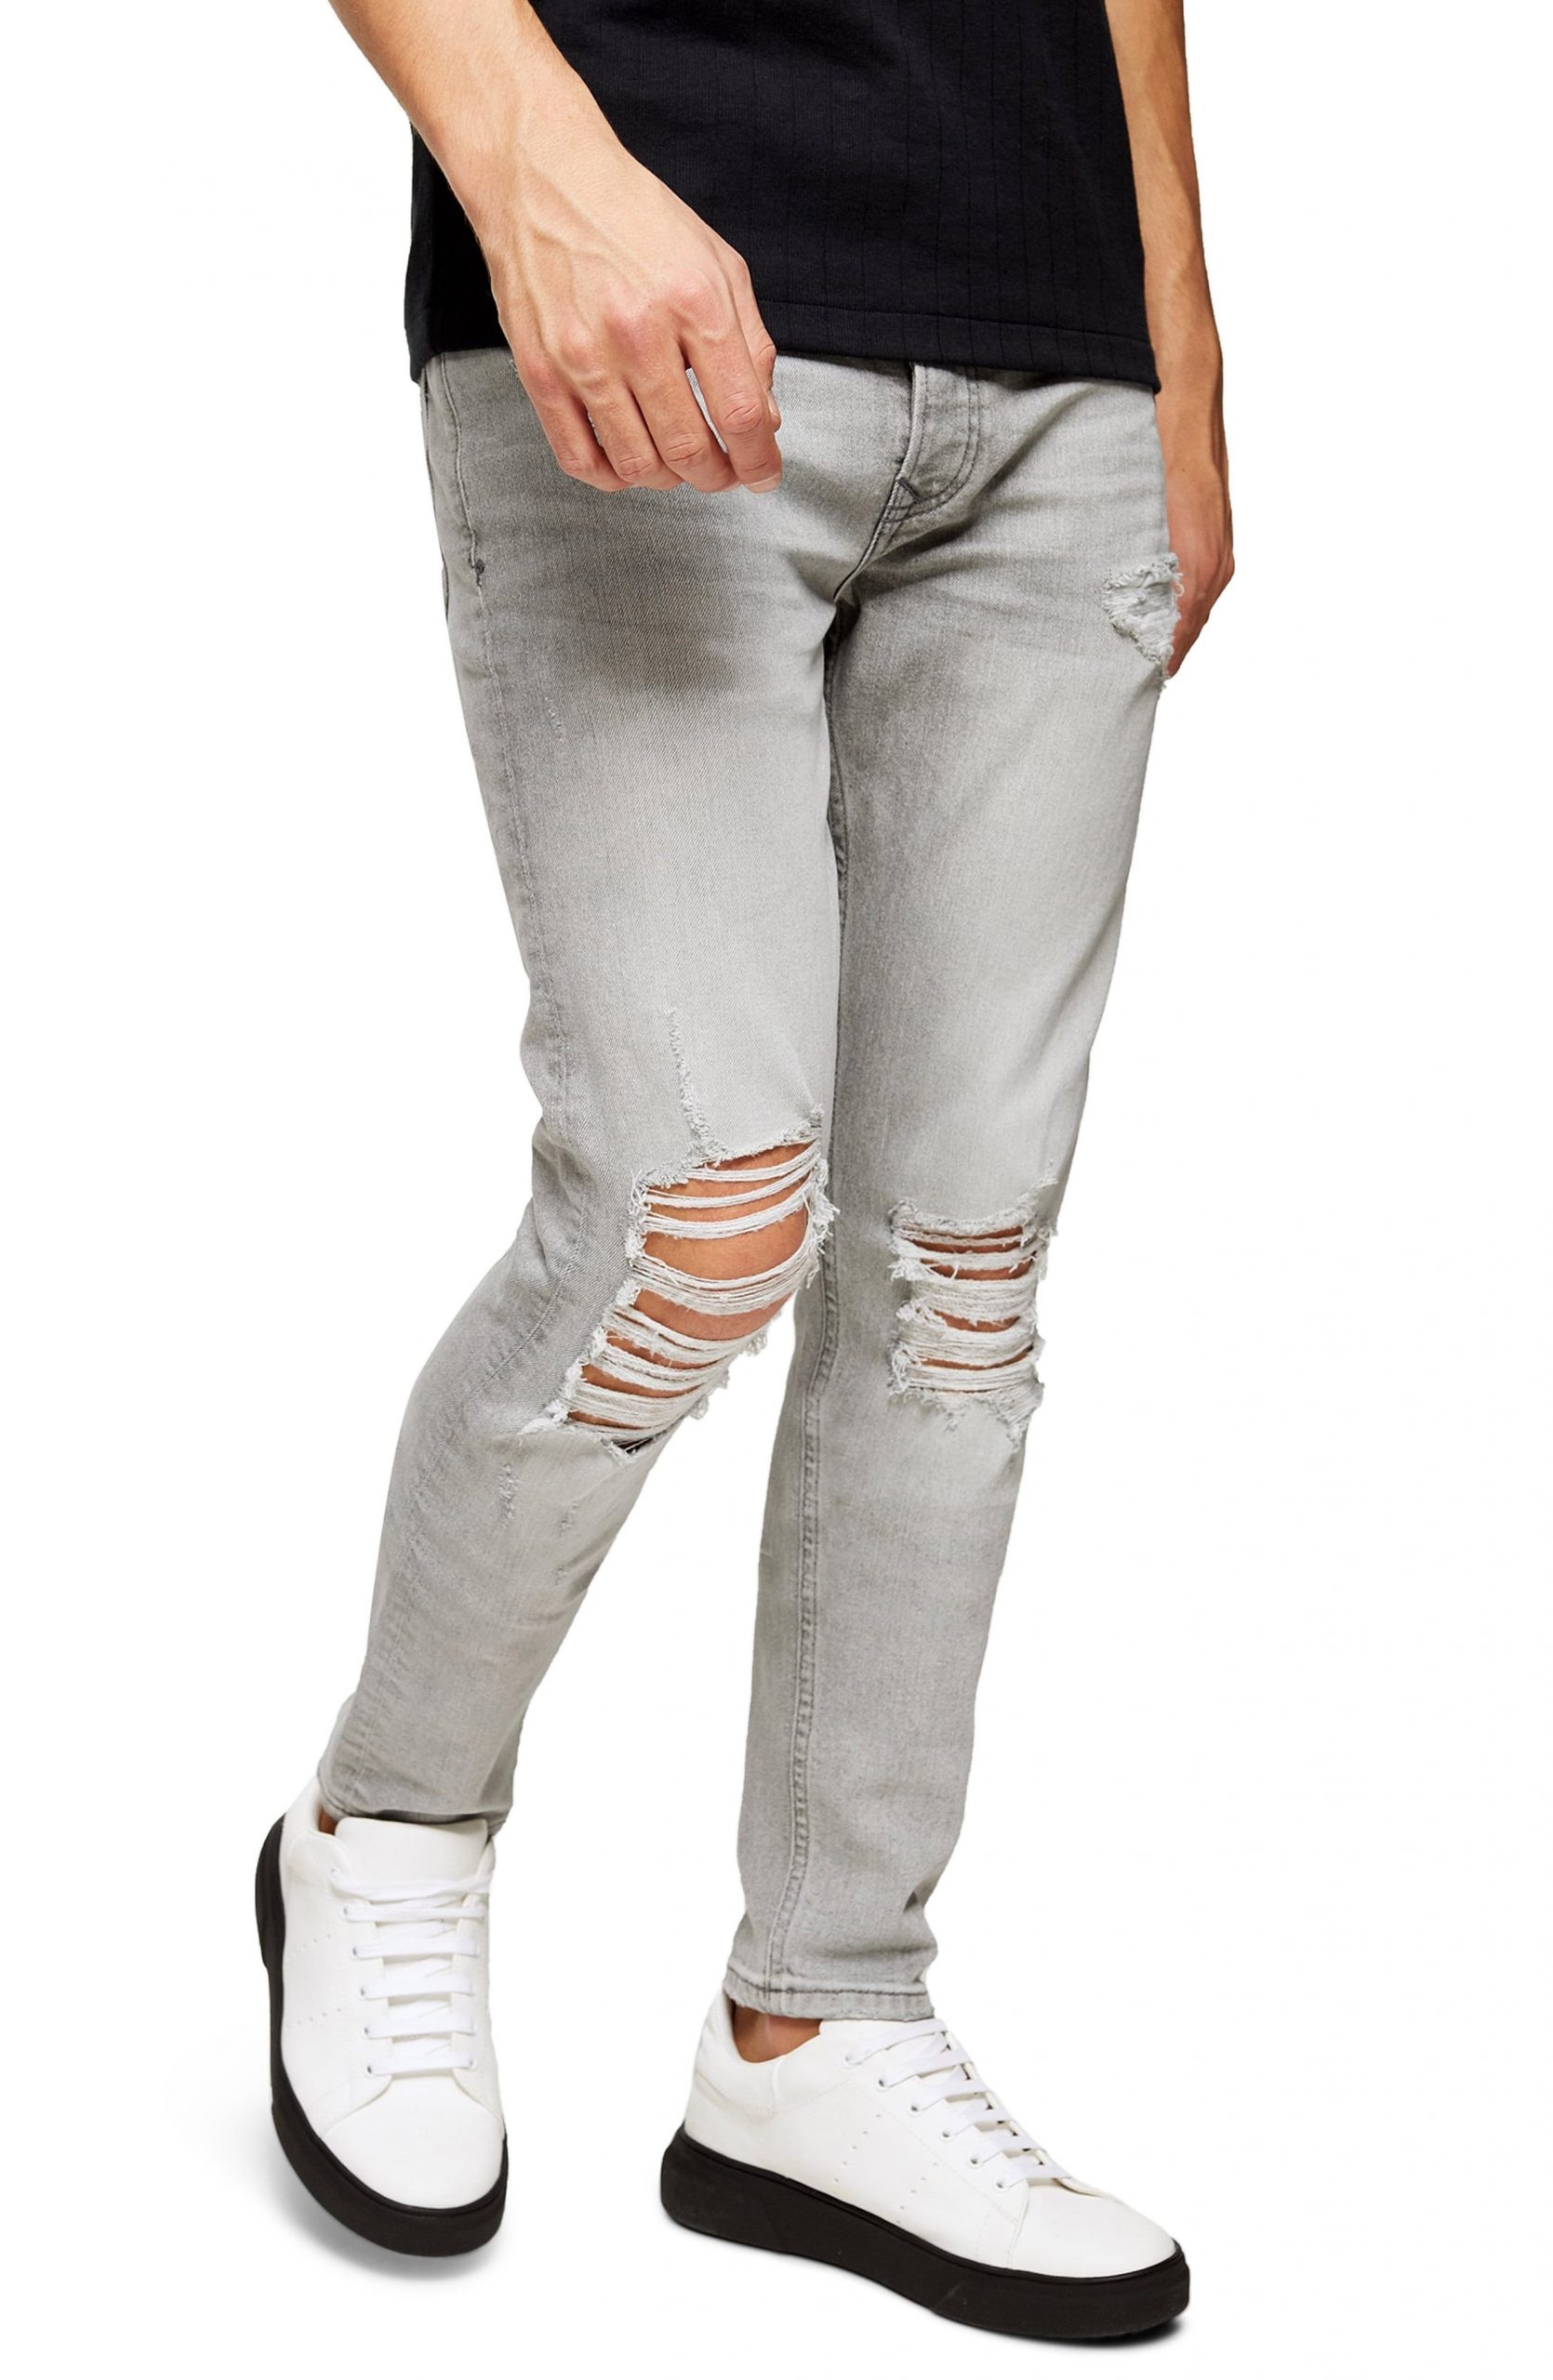 men's gray distressed jeans